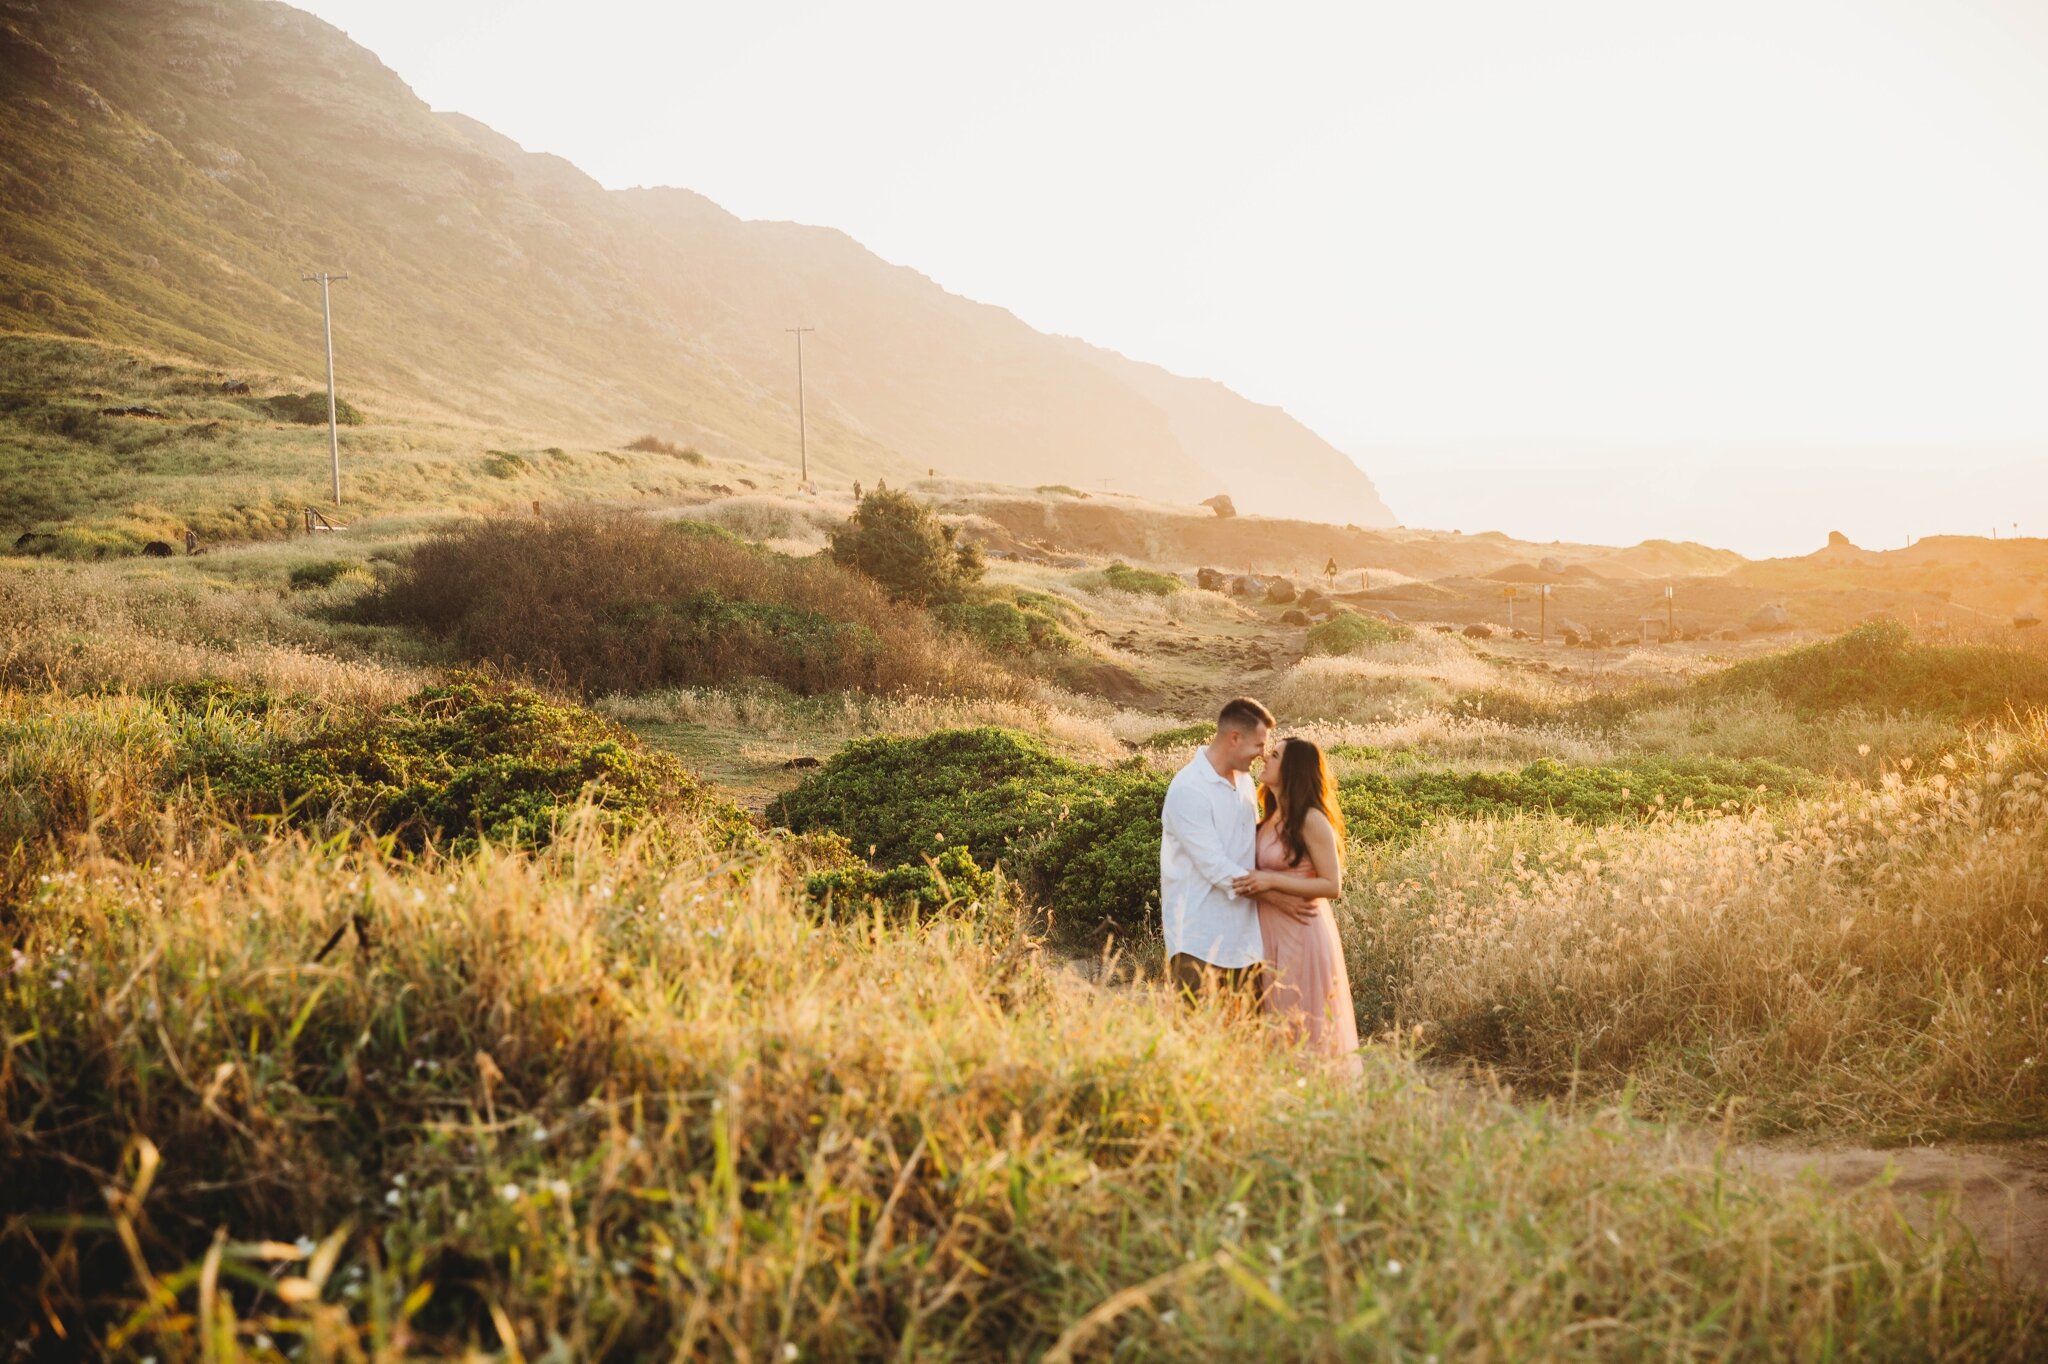 Romantic Sunset Engagement Photography Session at Kaena Point - Oahu Hawaii Photographer